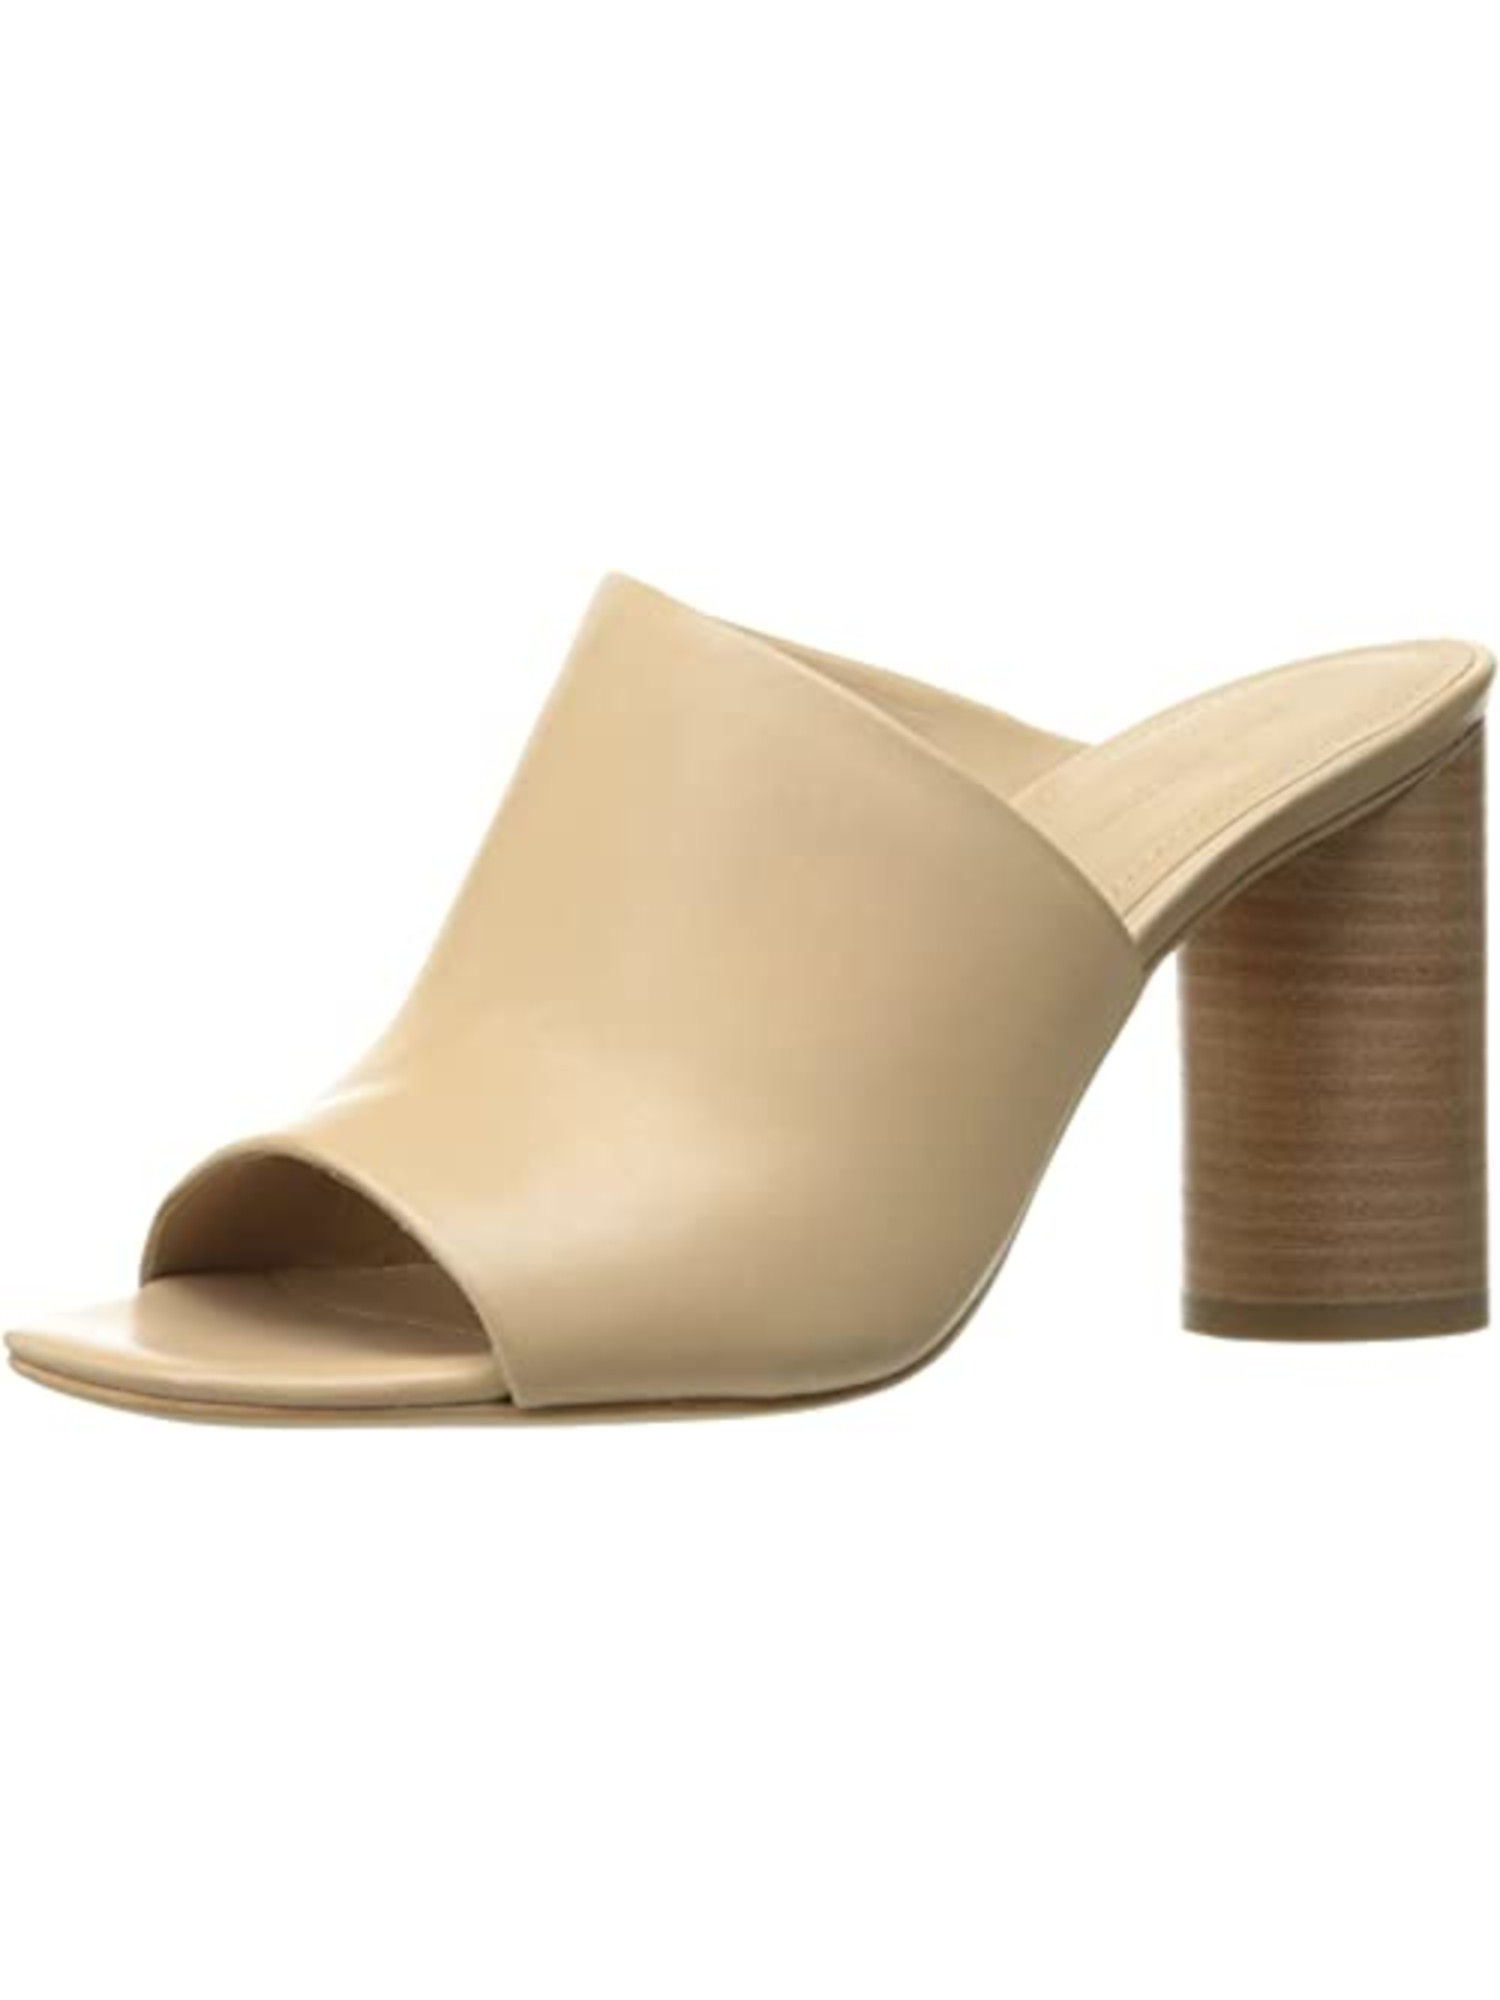 POUR LA VICTOIRE Womens Beige Asymmetrical Comfort Helena Open Toe Block Heel Slip On Leather Heeled Mules Shoes 7.5